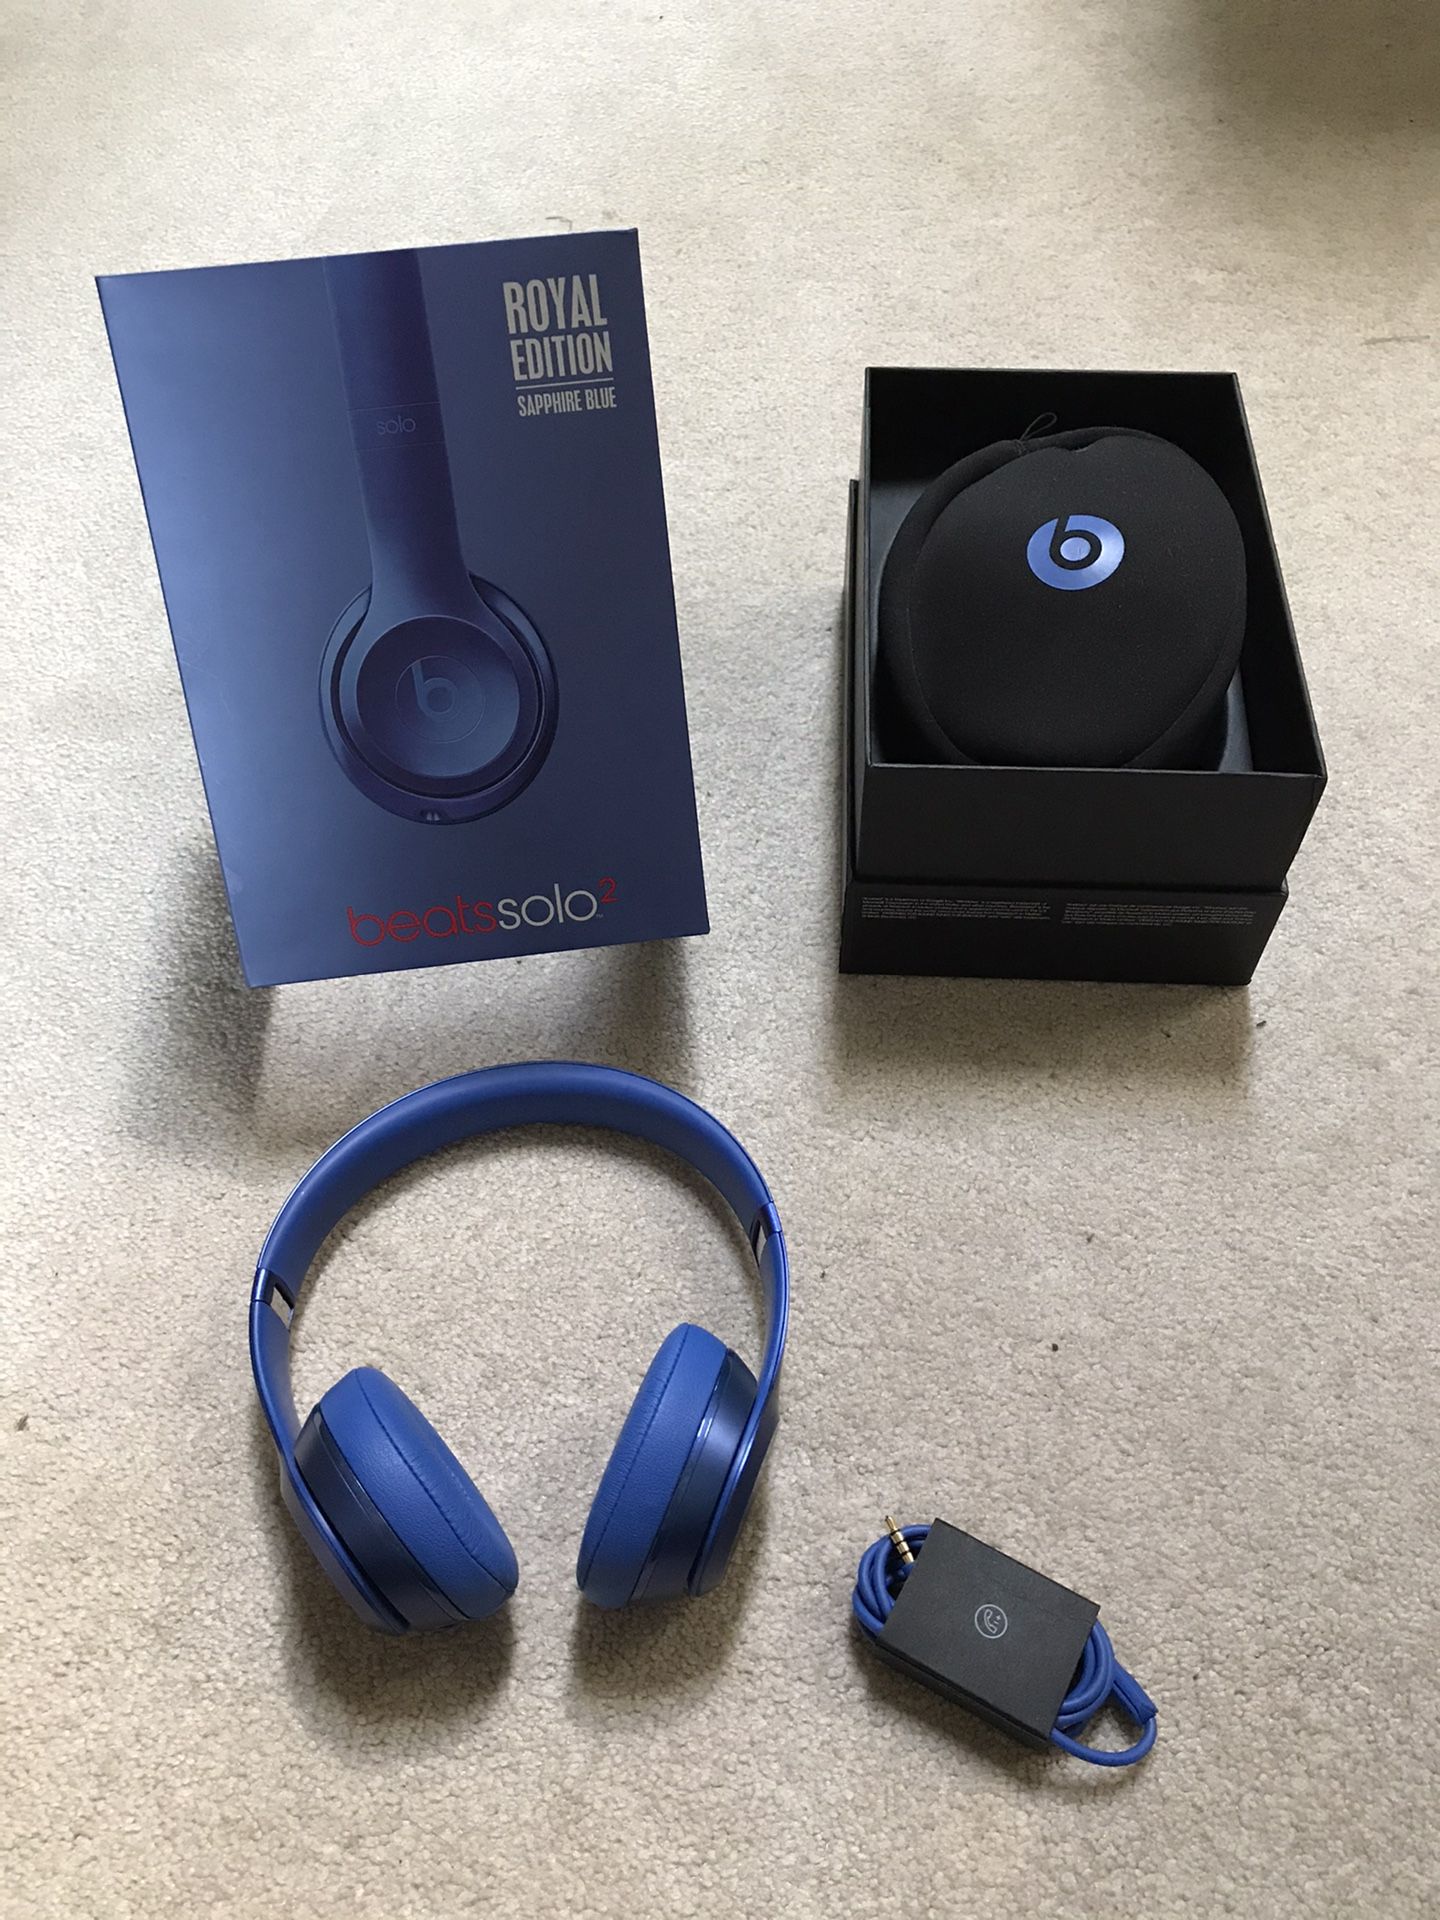 Sapphire Blue Beats Solo 2 Headphones